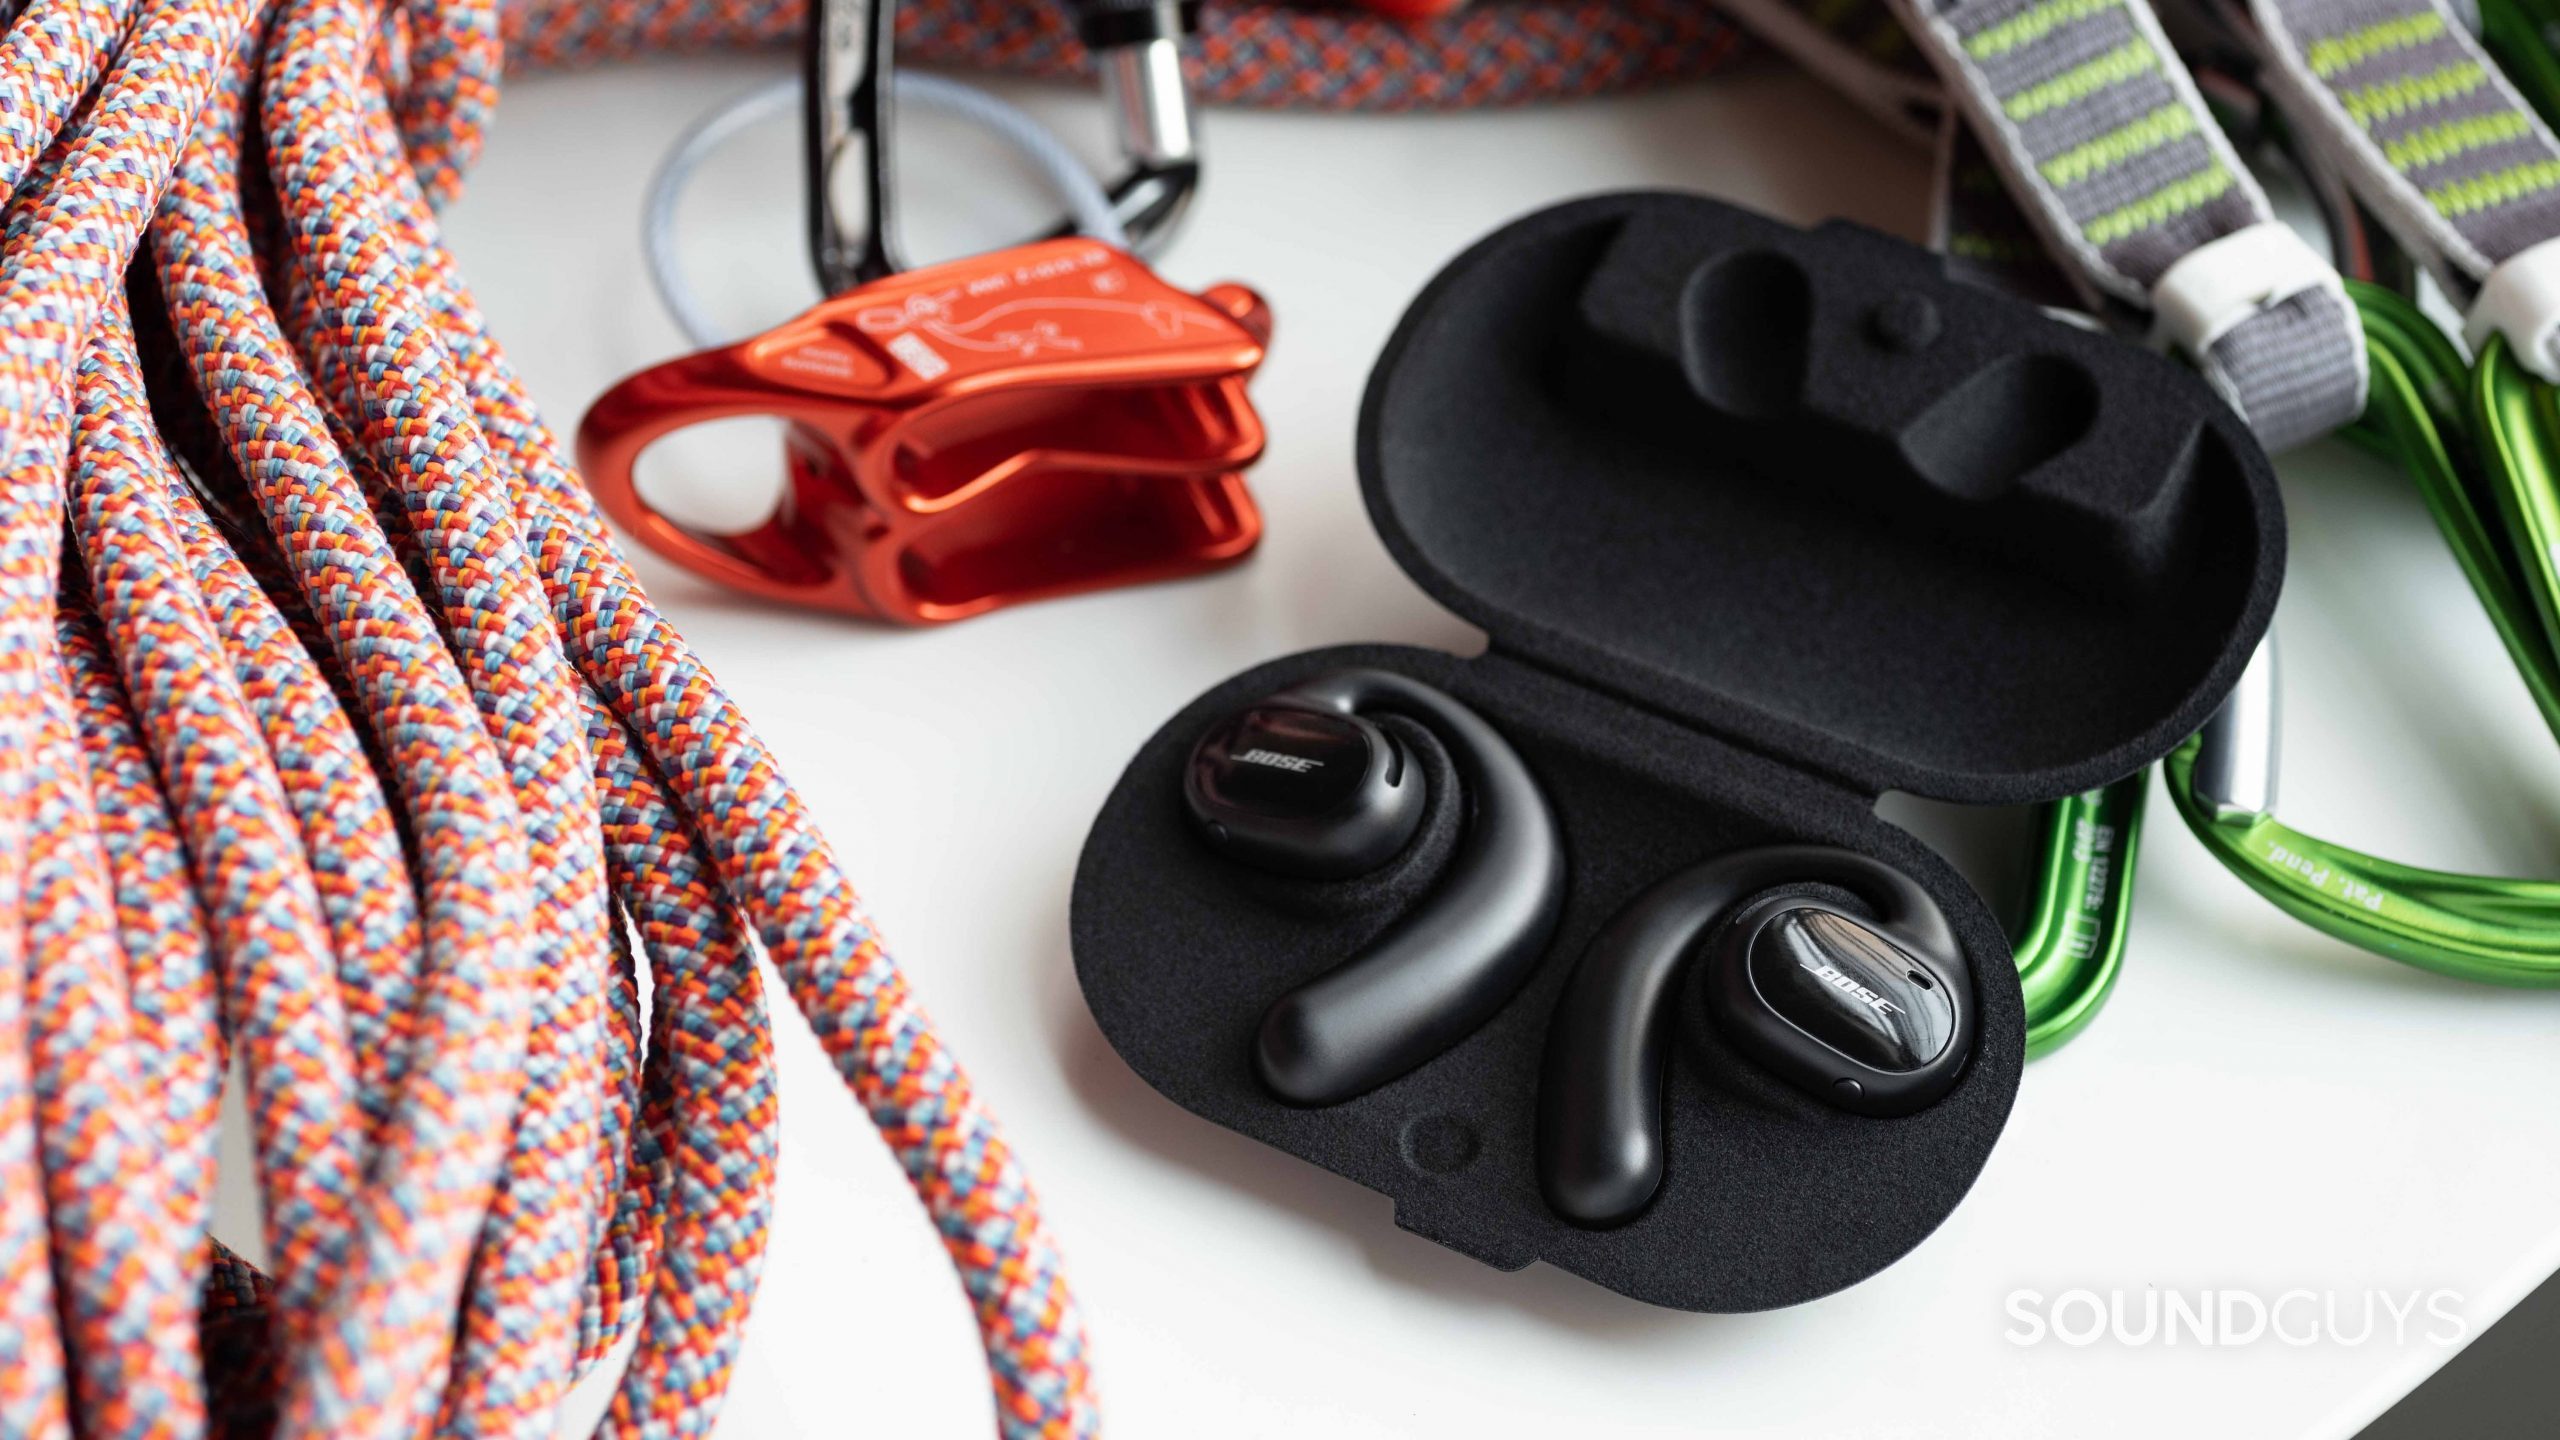 komme Bordenden Bagvaskelse Bose Sport Open Earbuds review: Very niche - SoundGuys